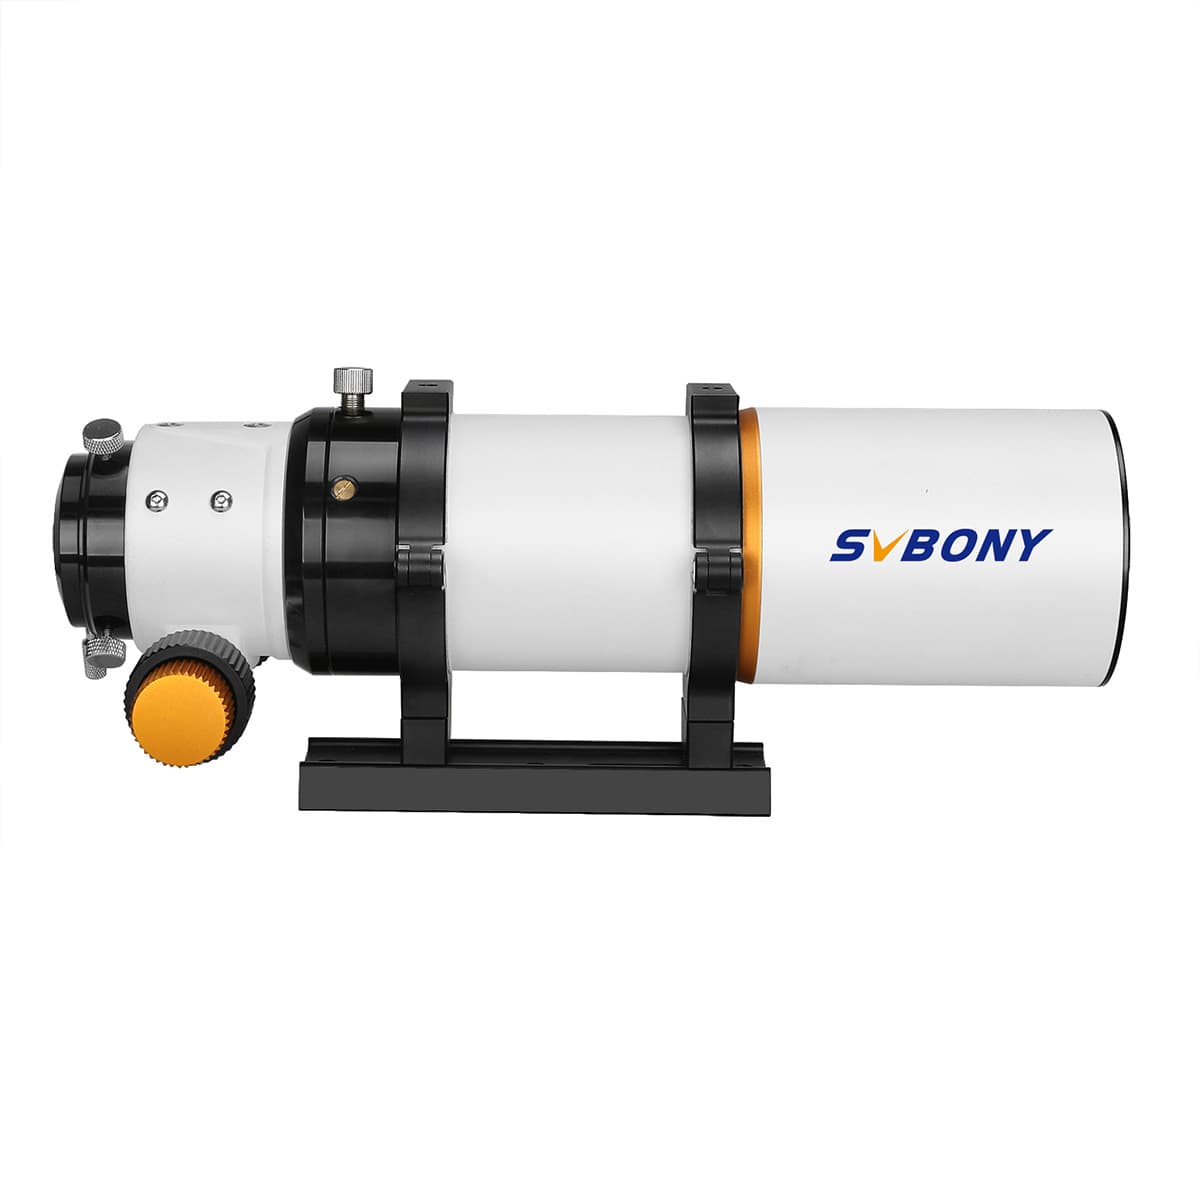 SVBONY SV503 天体望遠鏡 屈折式 望遠鏡 高倍率 口径80mm EDガラス 焦点距離560mm OTA 鏡筒のみ 学研 キャンプ 天 